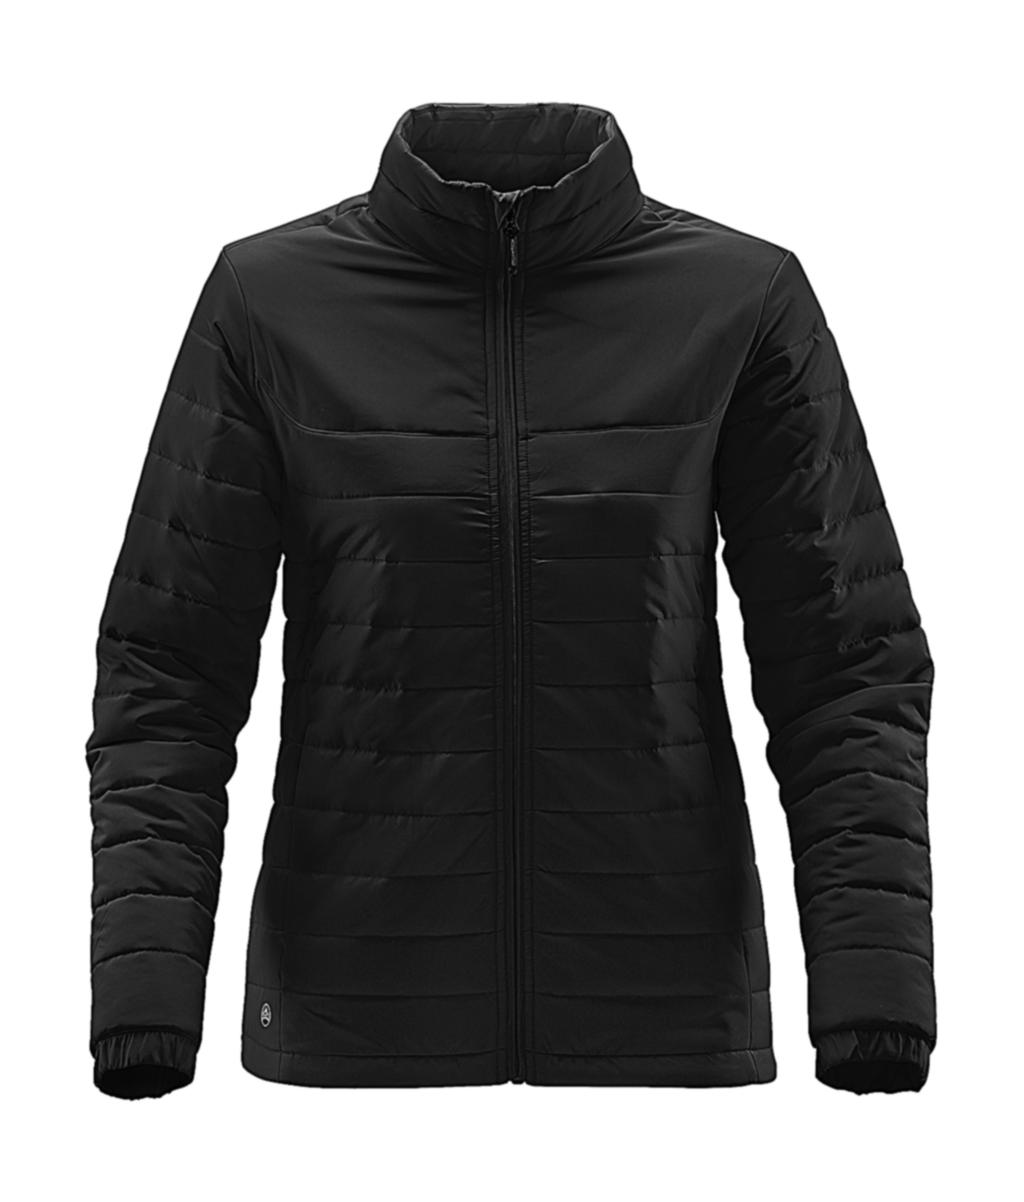  Womens Nautilus Thermal Jacket in Farbe Black